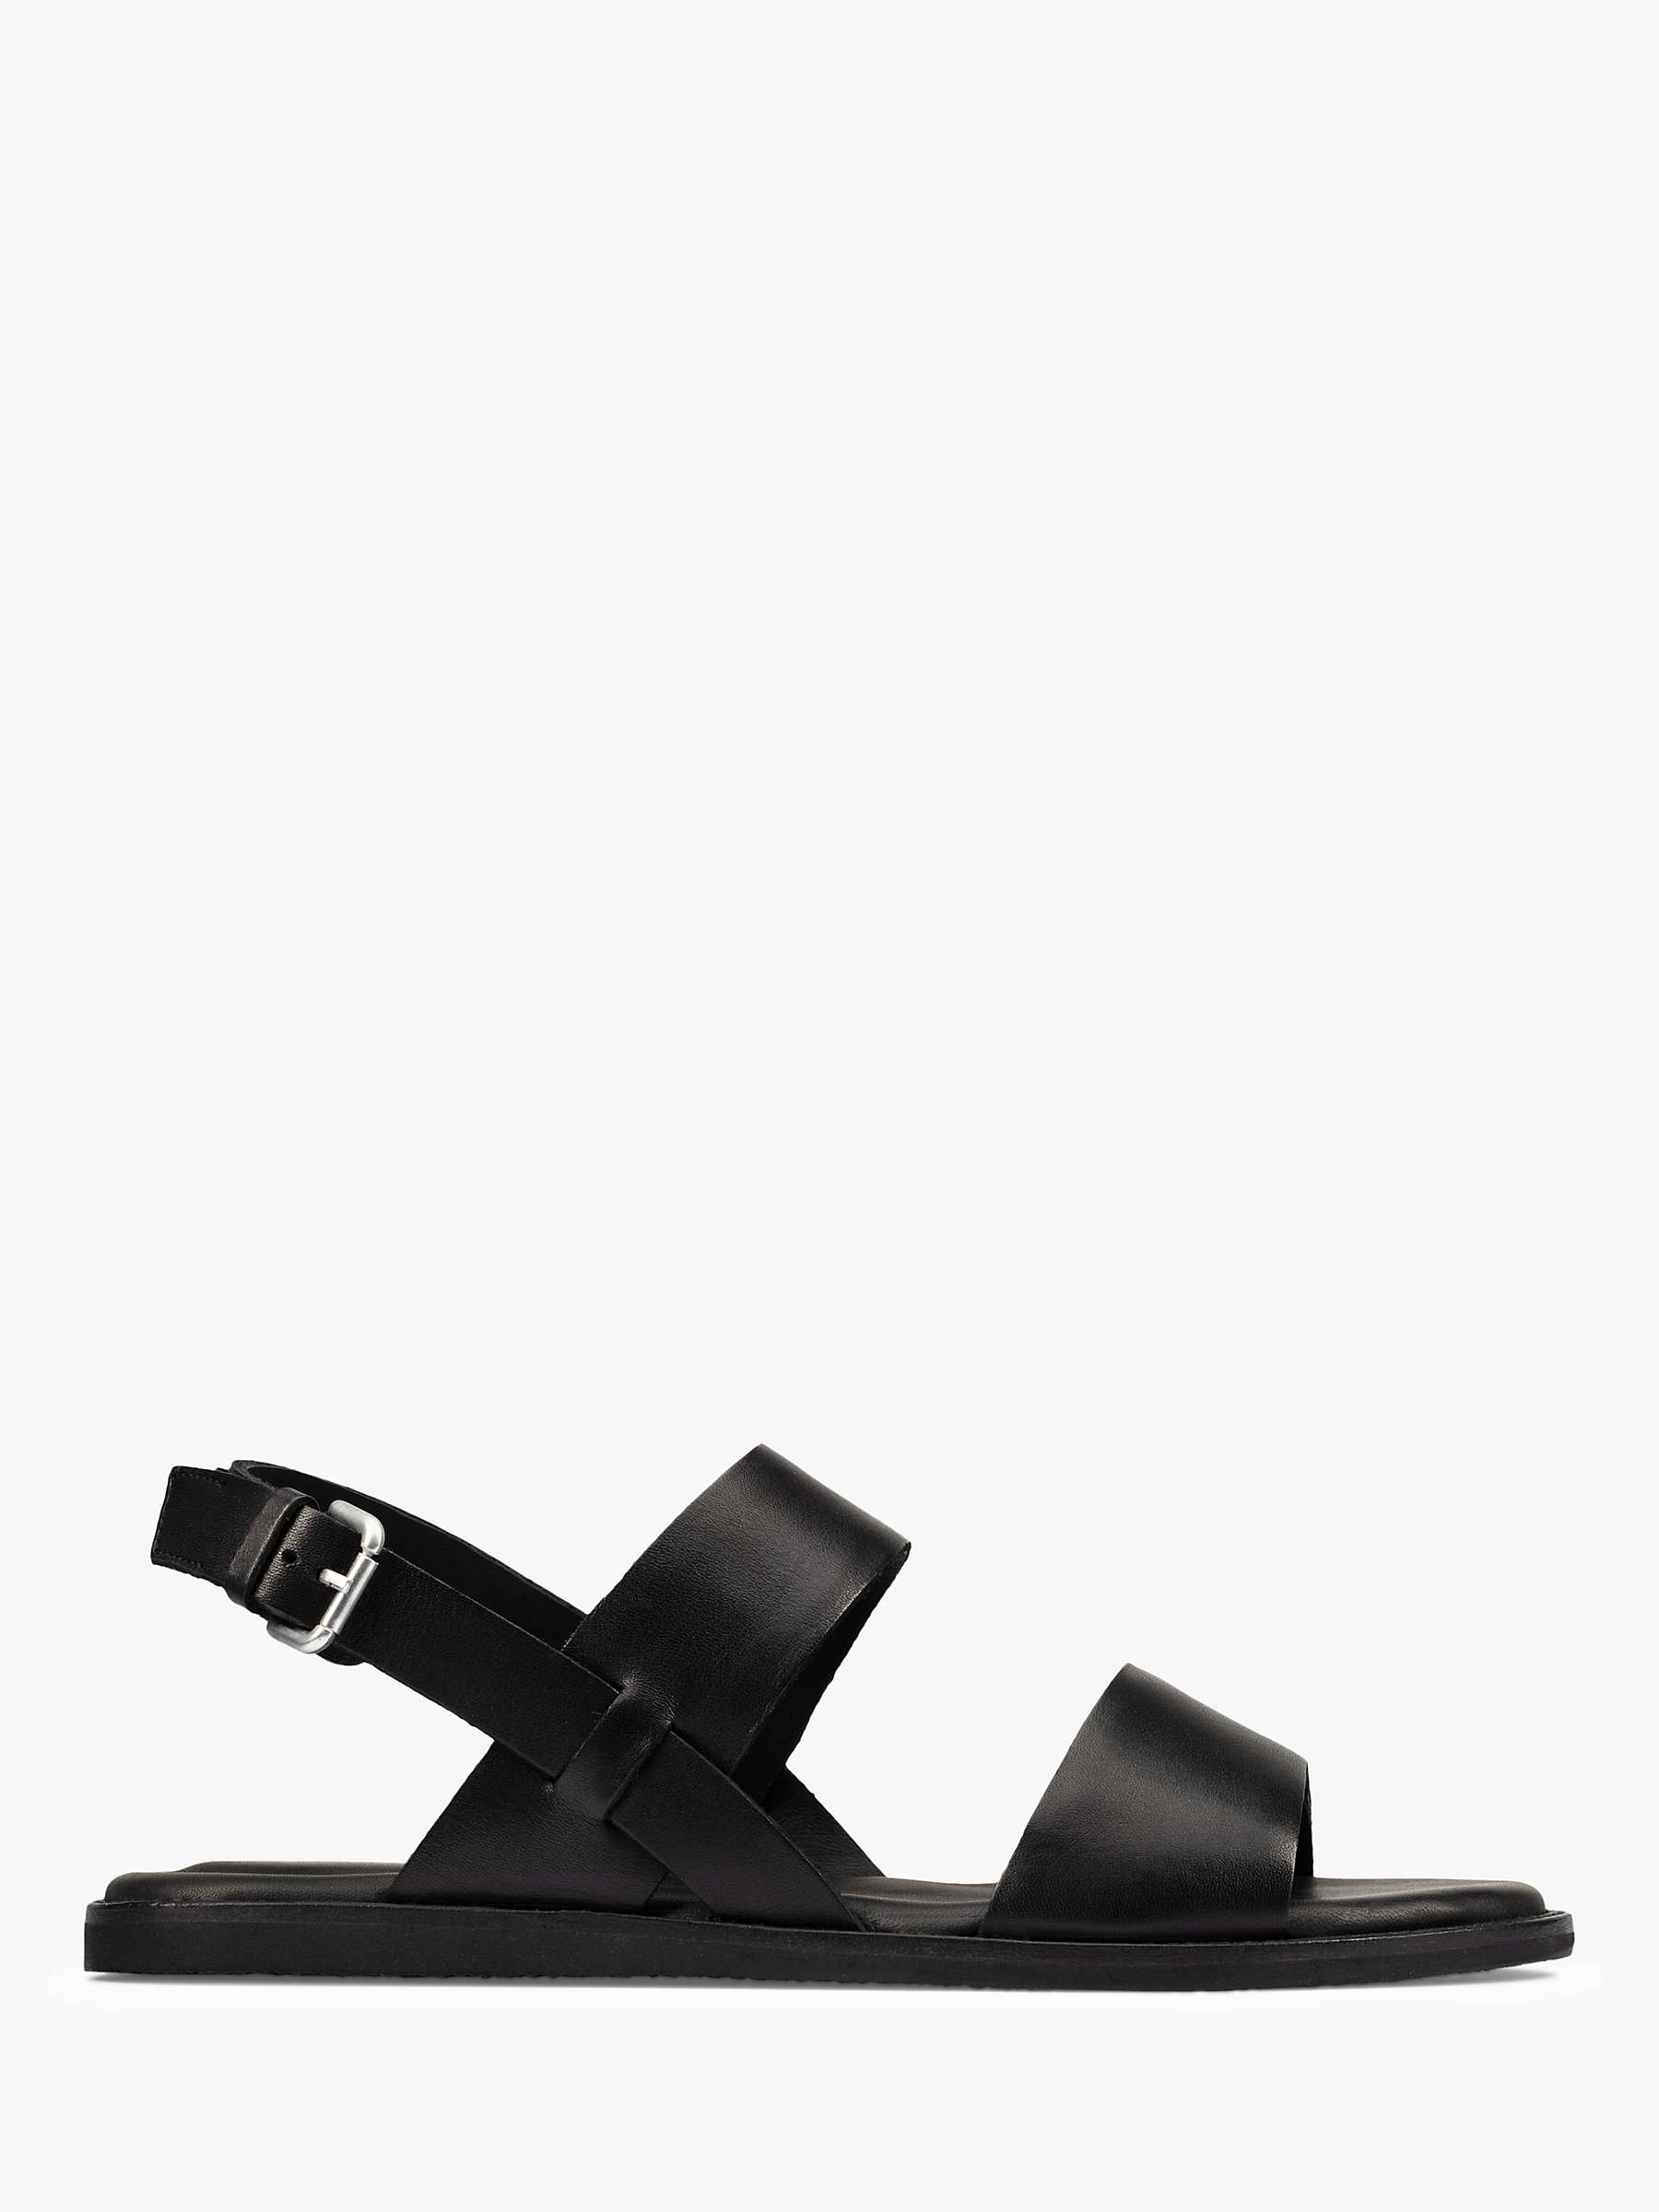 Clarks Karsea Strap Leather Sandals, Black at John Lewis & Partners